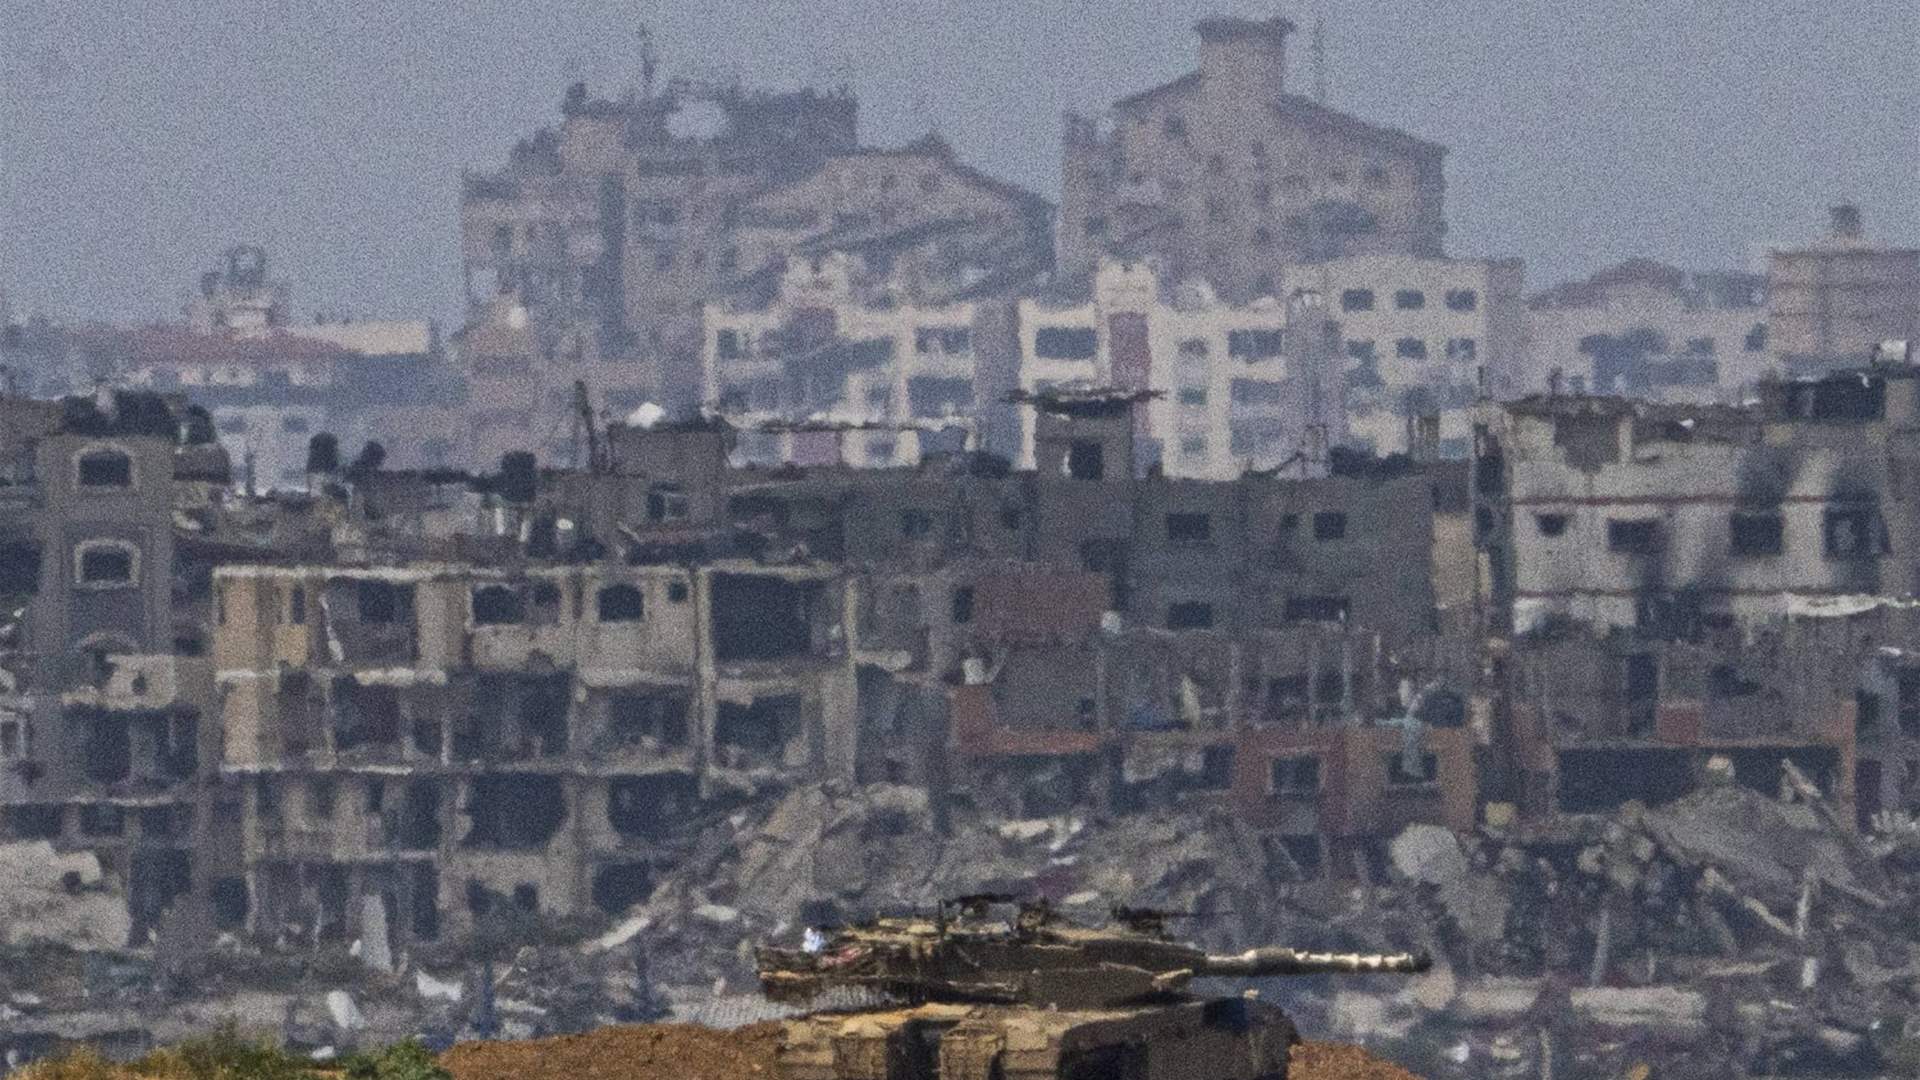 Dozens of stalled Israeli visas seen hindering Gaza aid efforts